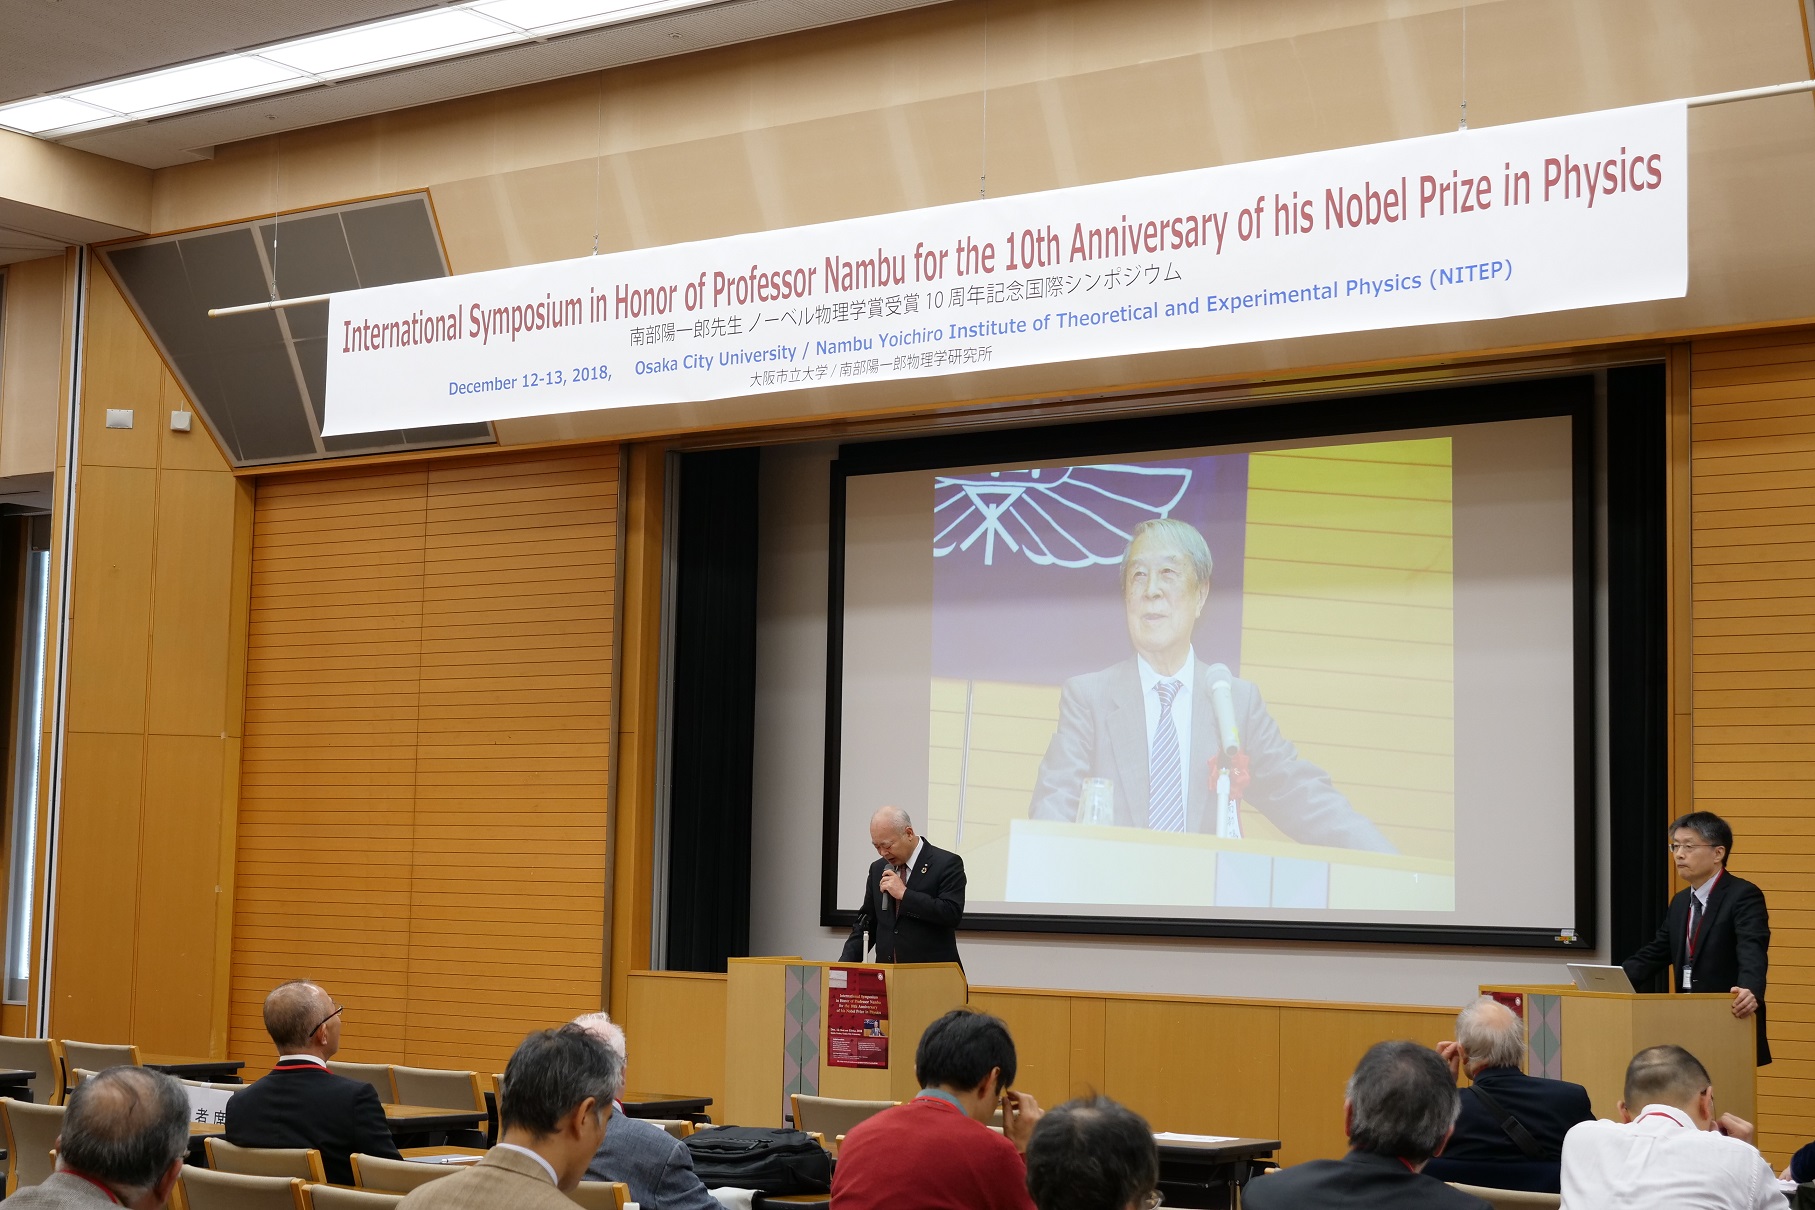 Opening address by President of Osaka City University